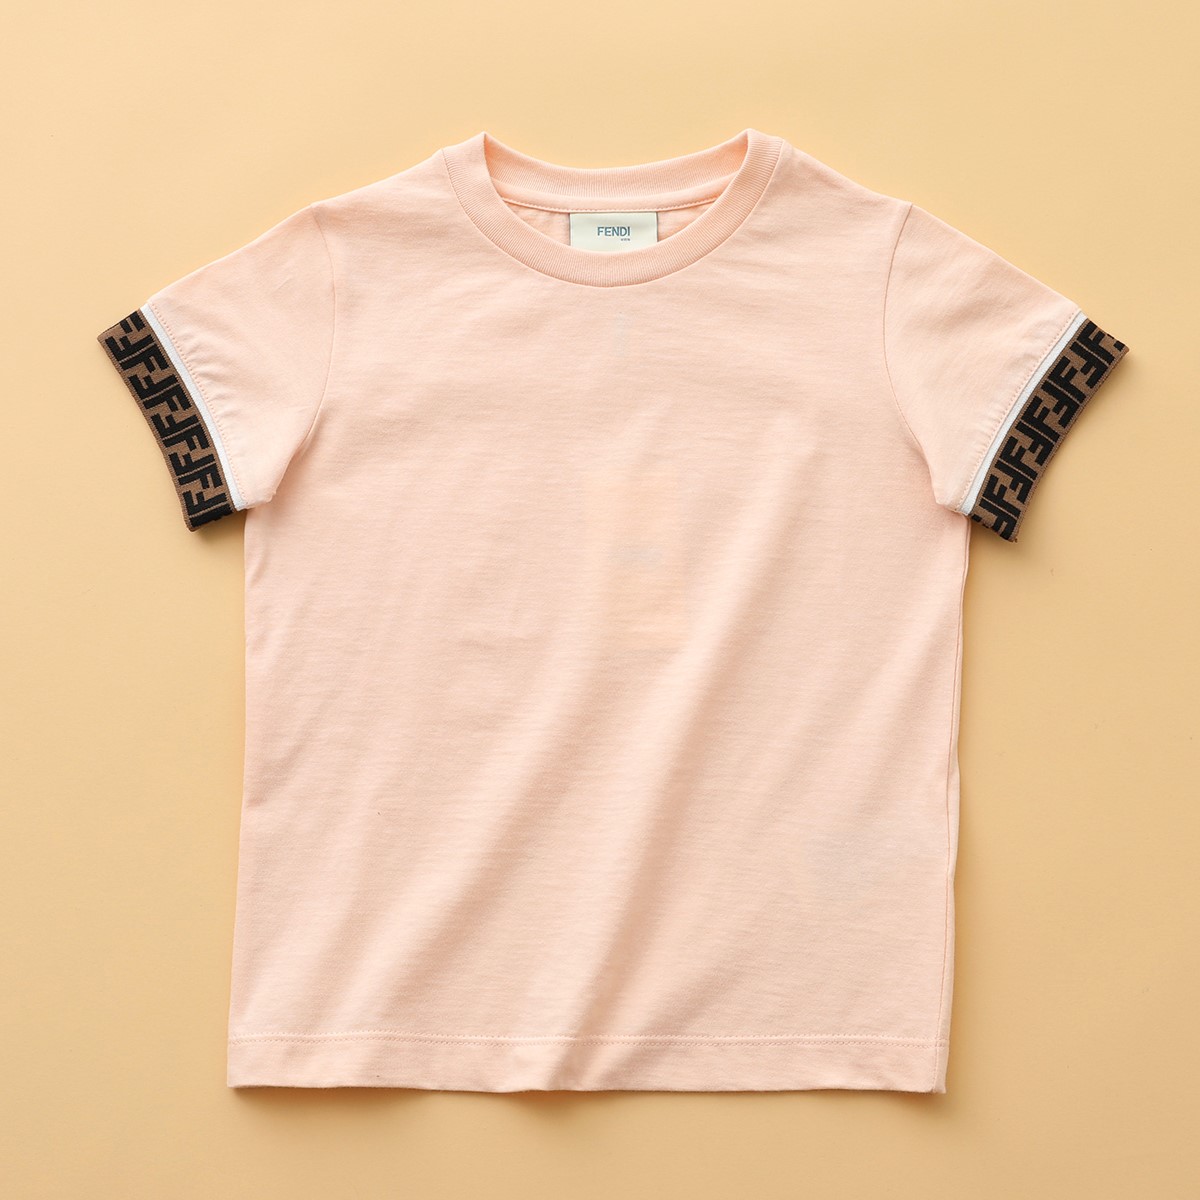 FENDI KIDS フェンディ キッズ Tシャツ JUI018 7AJ ガールズ クルーネック 半袖 カットソー FFロゴテープ コットン カラー2色